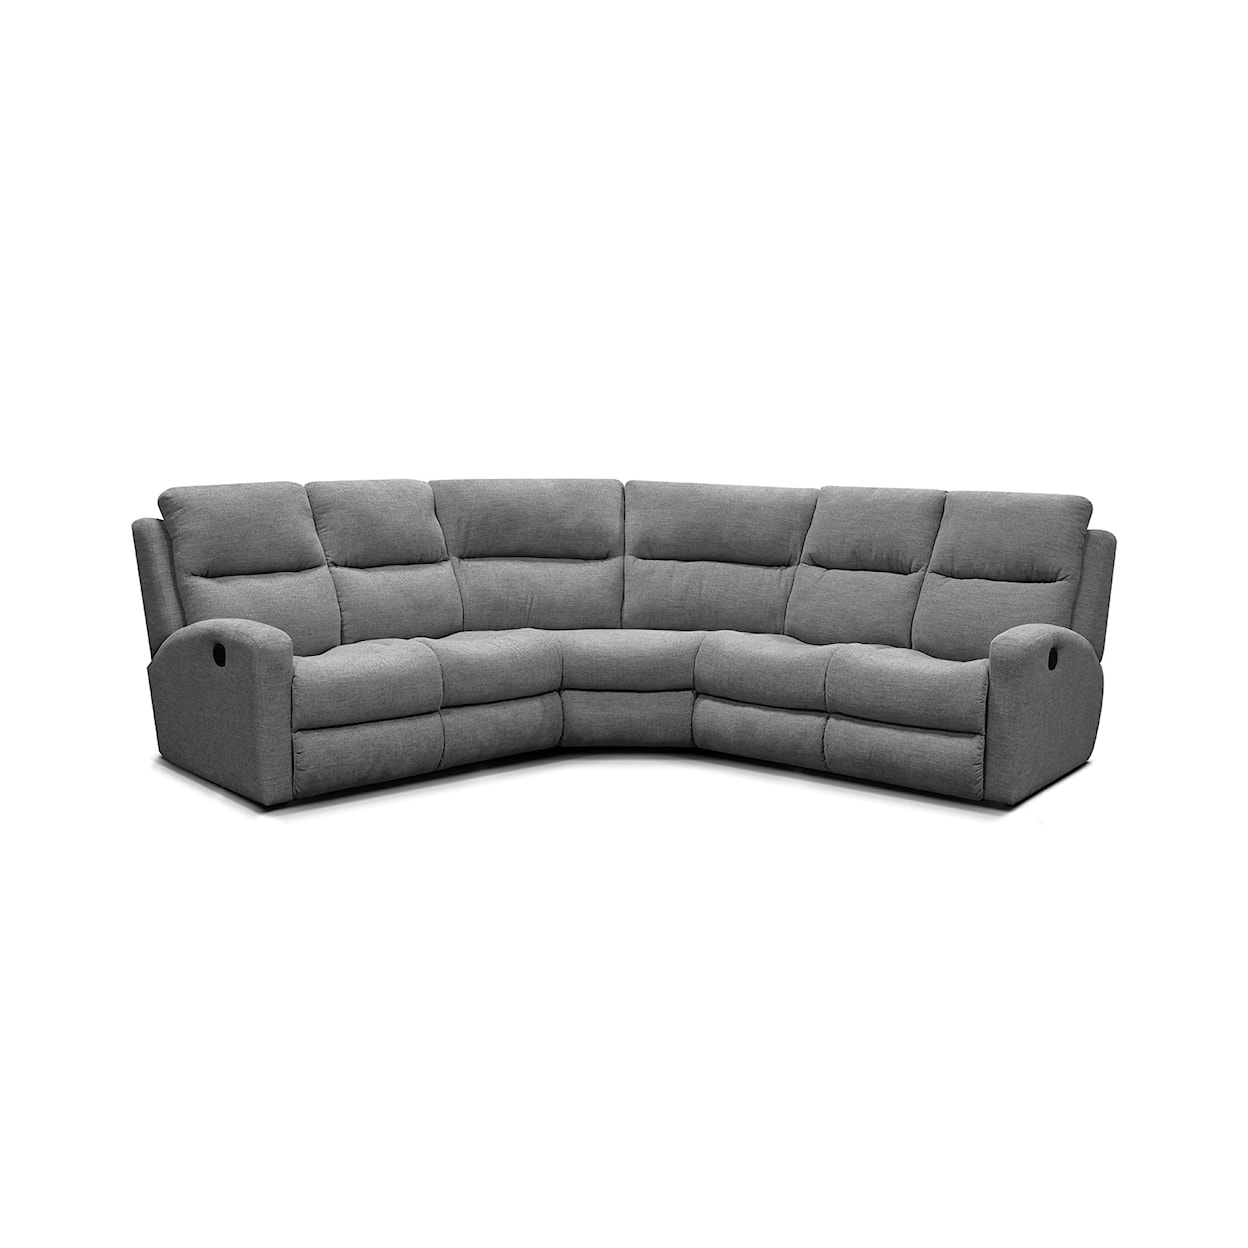 England EZ2600 Series 3-Piece Reclining Sectional Sofa